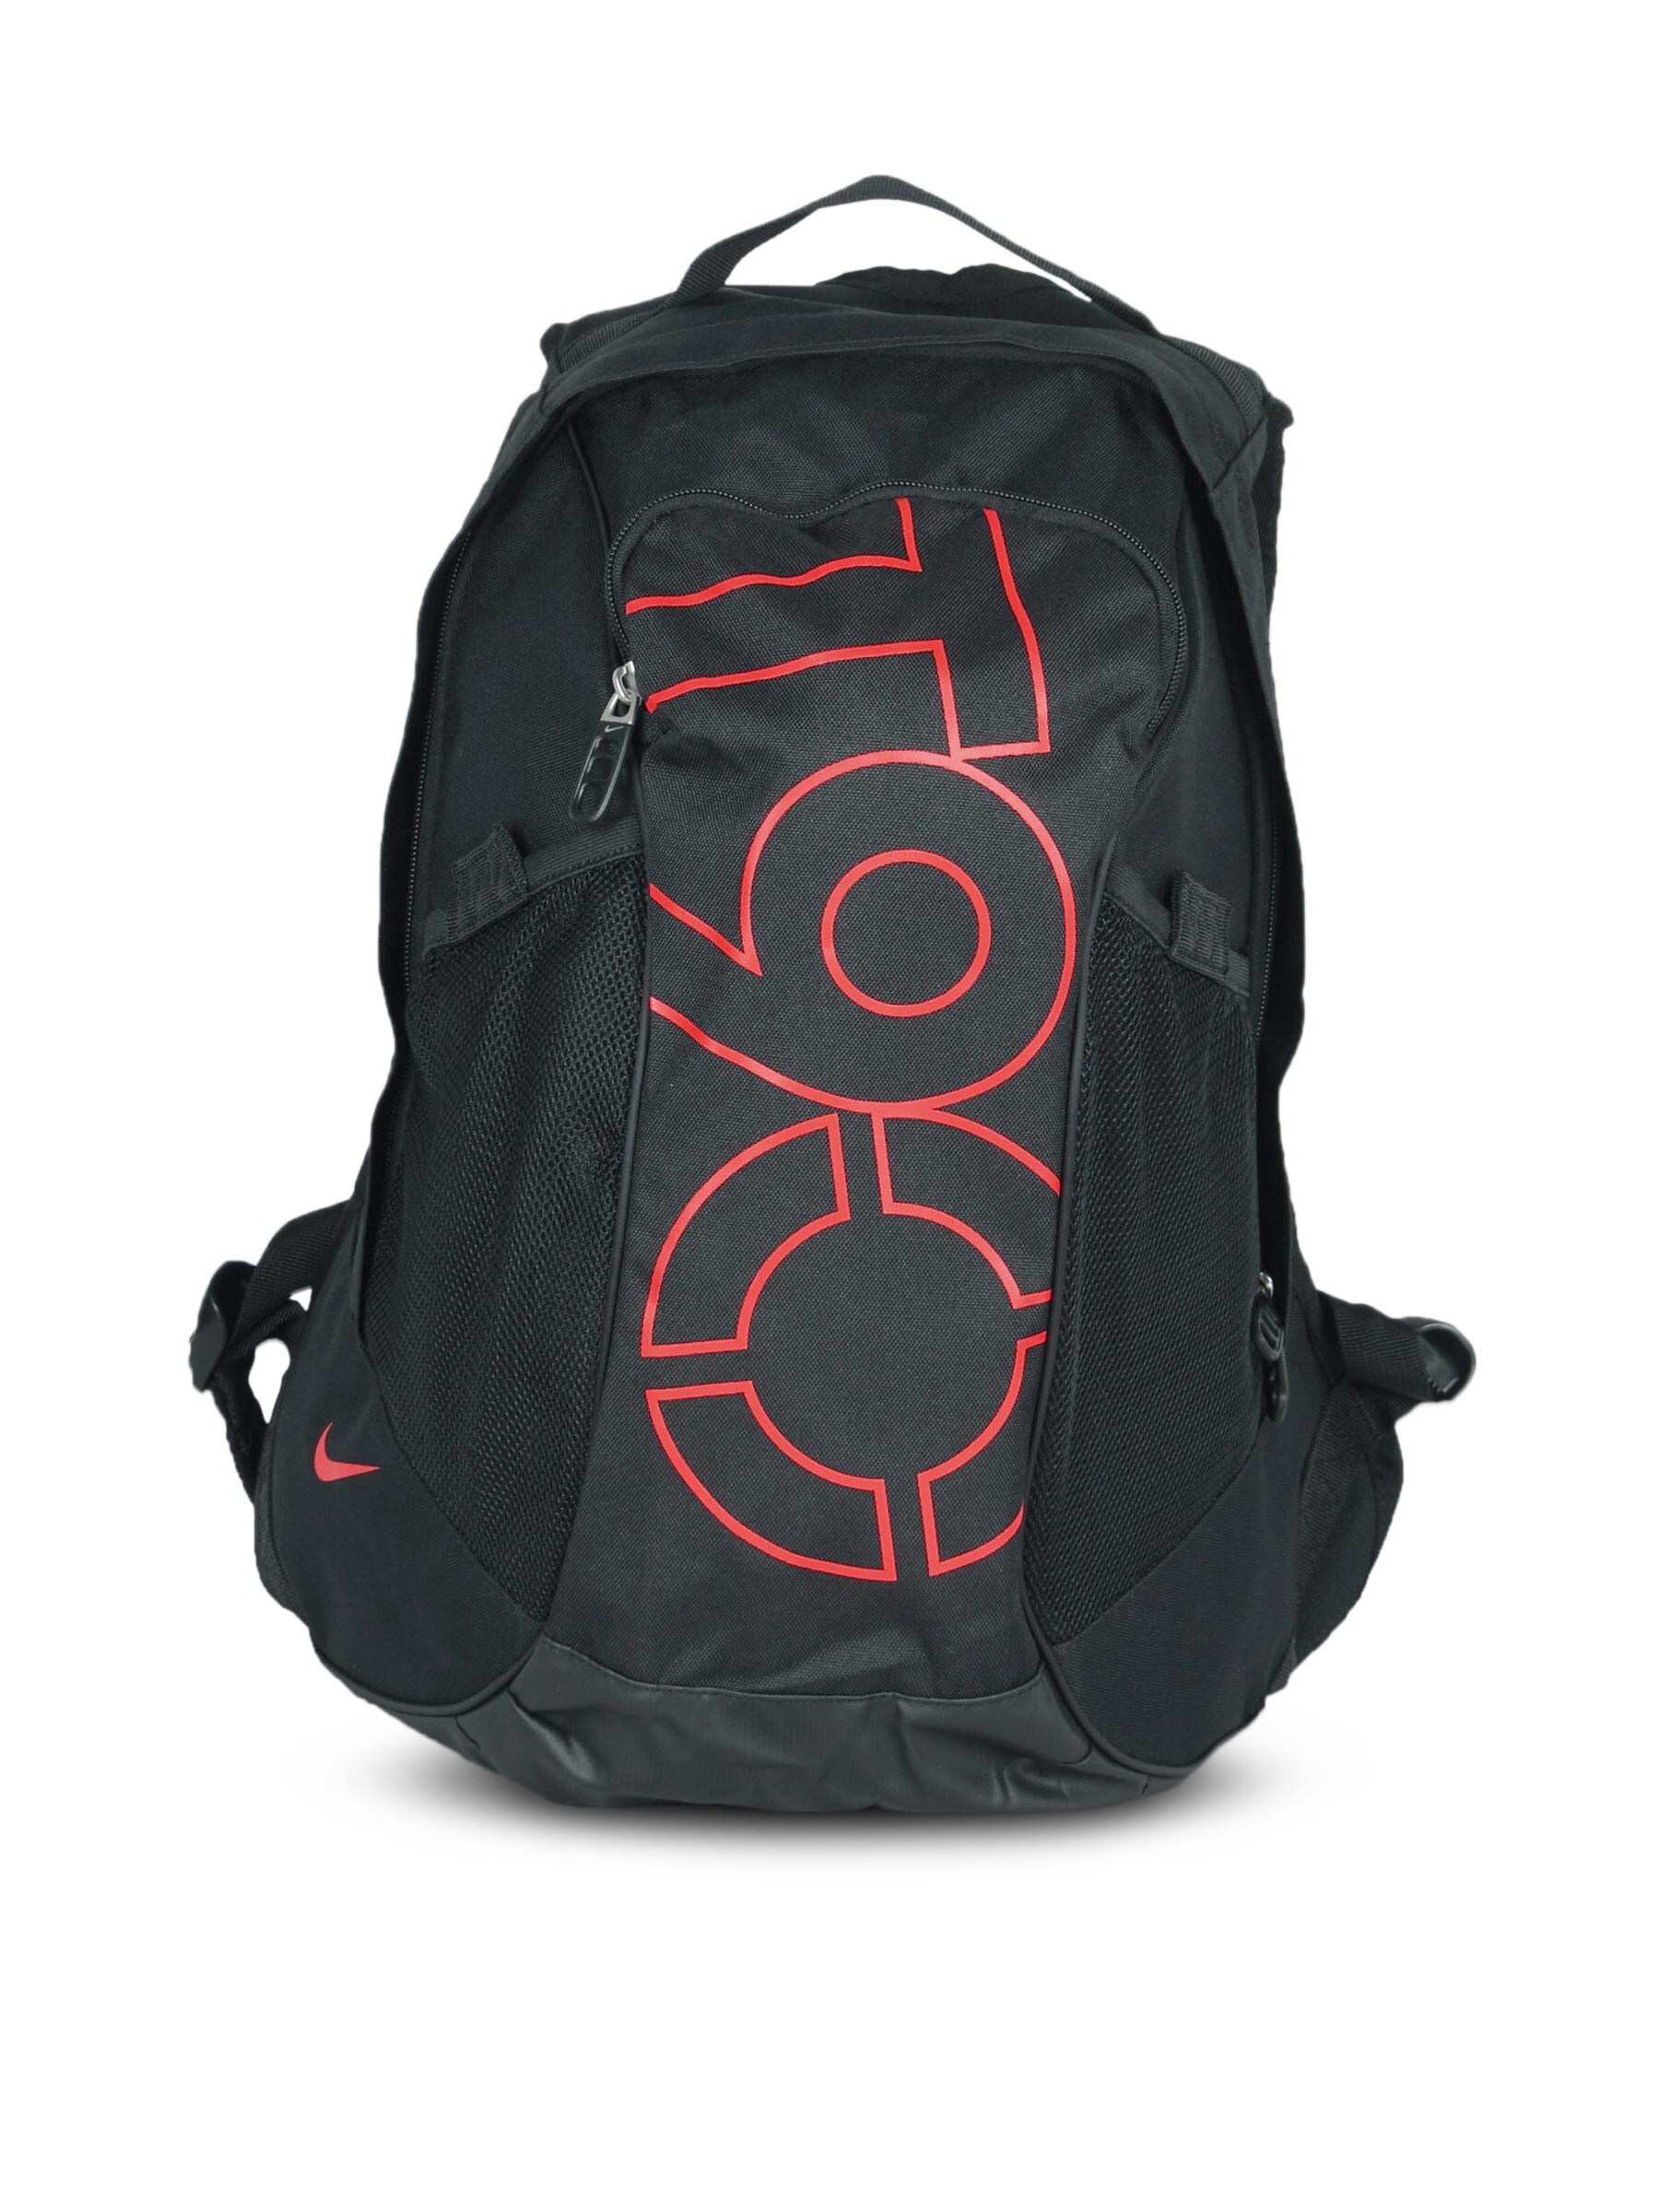 Nike Unisex Total 90 Black Backpack